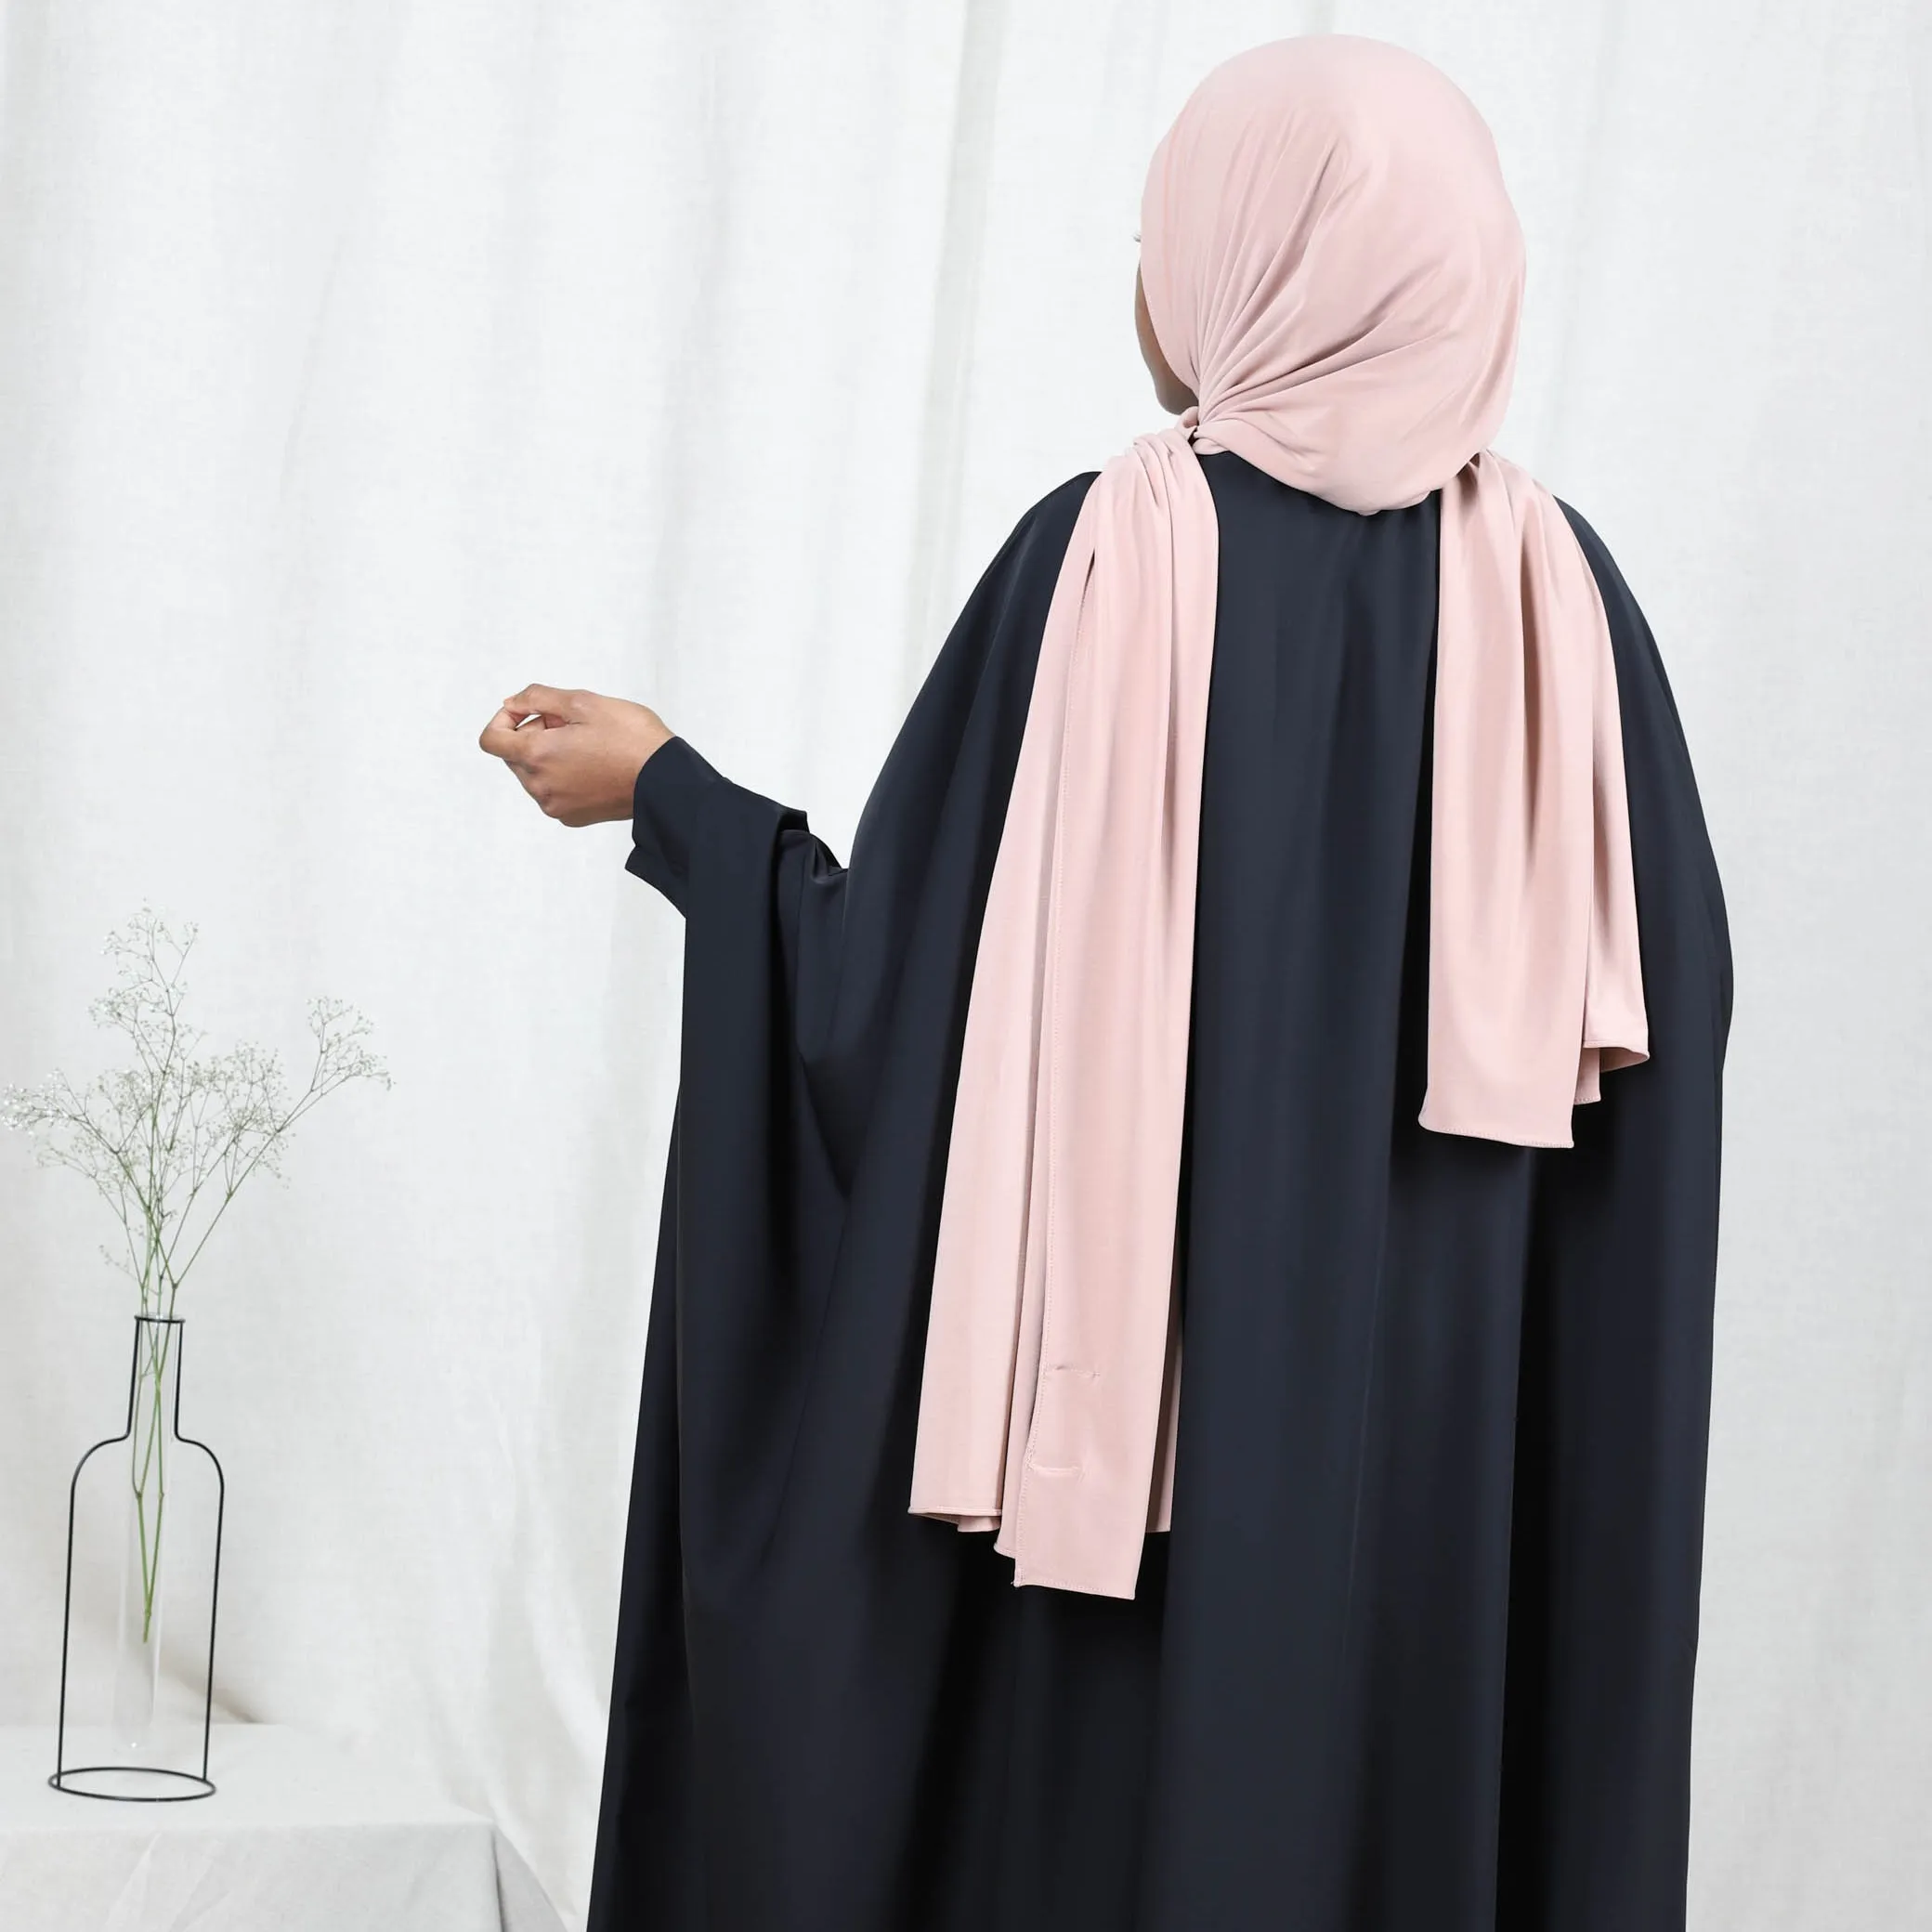 Vestido musulmán de manga larga para mujer, nuevo modelo en Dubái, Abaya